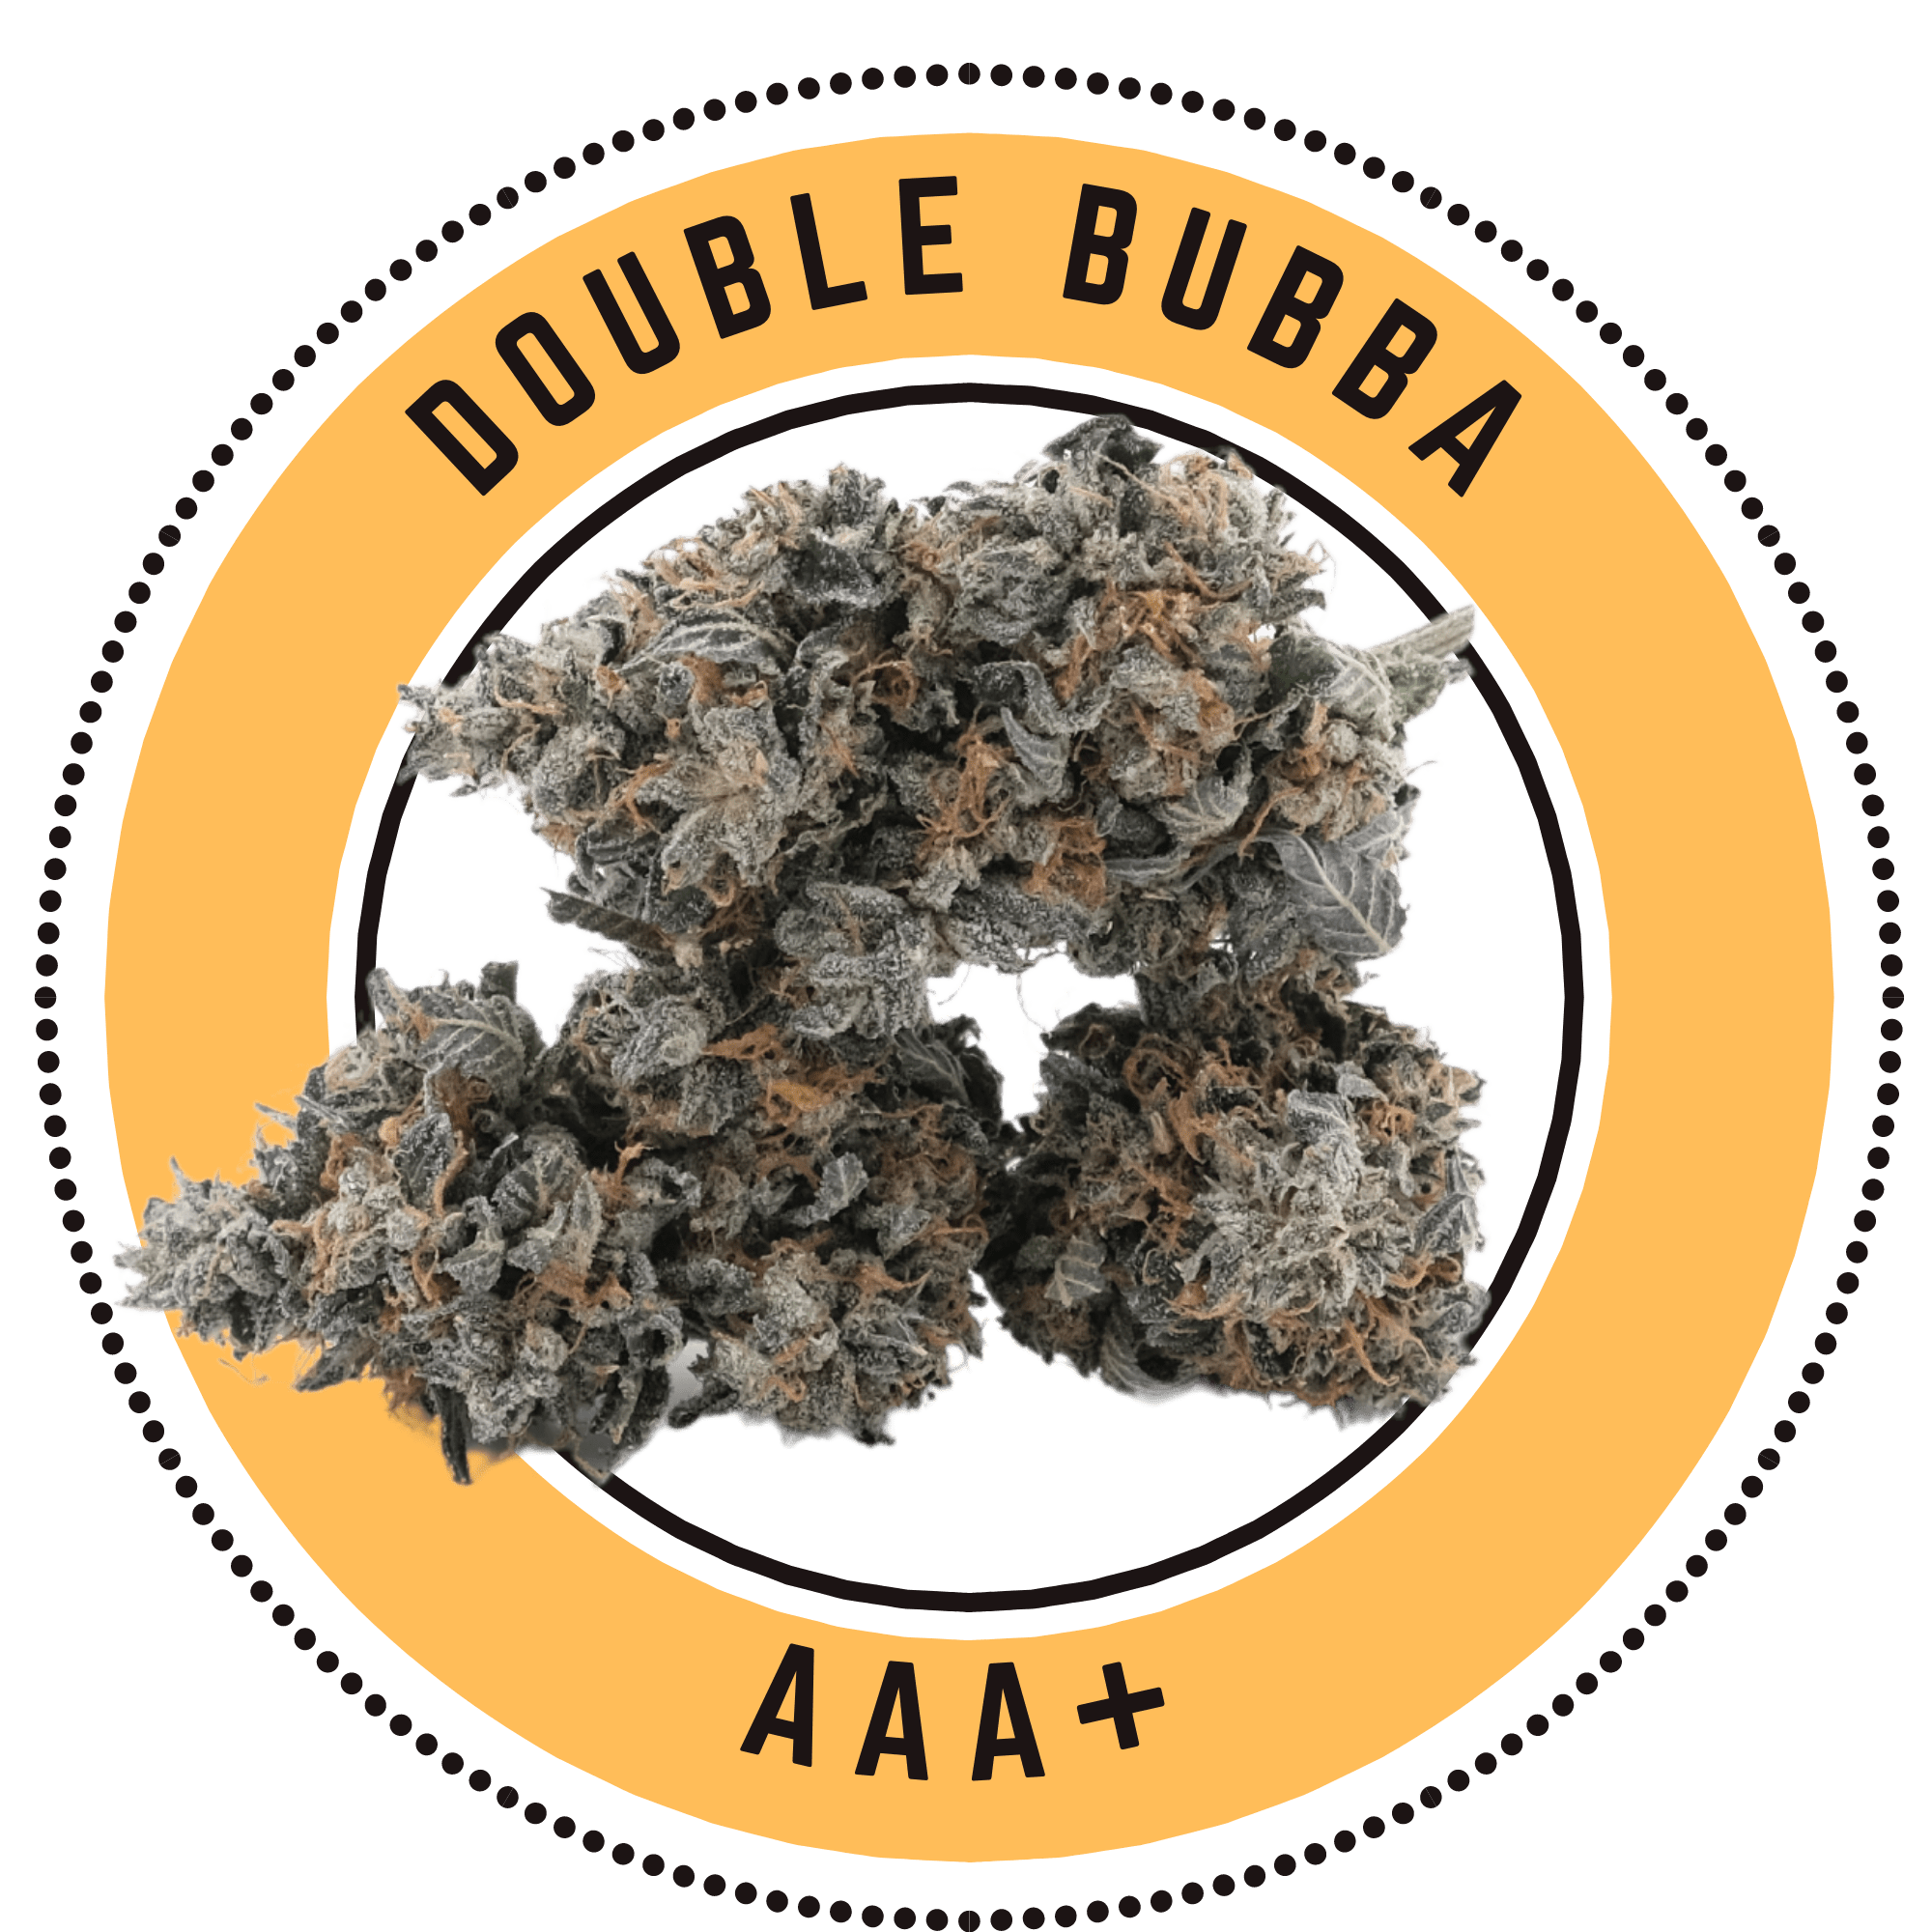 Double Bubba – Indica